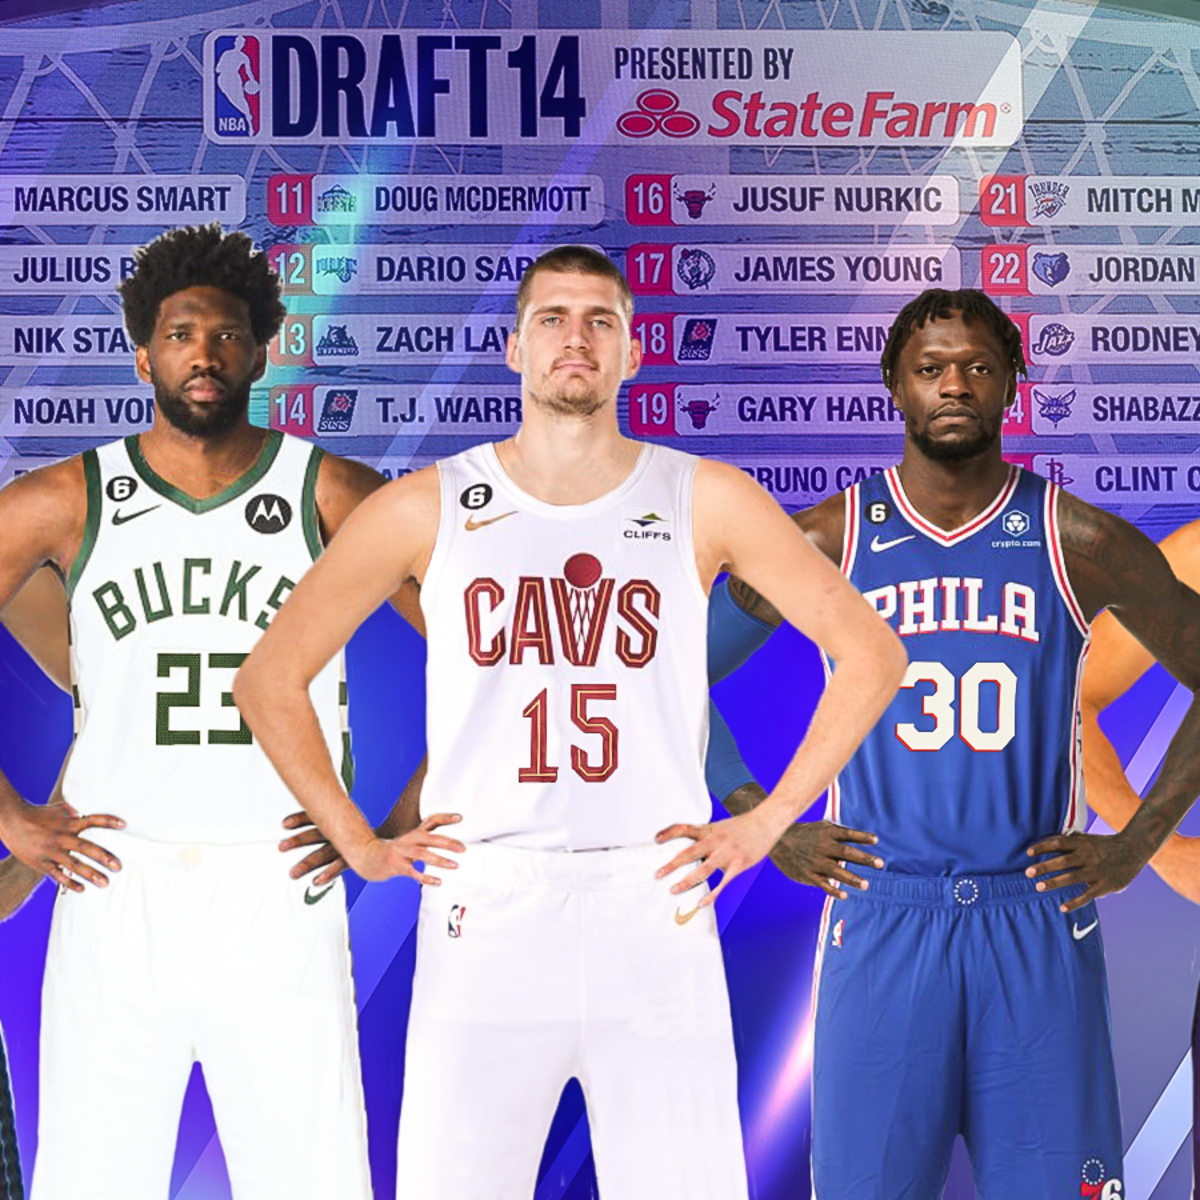 2014 NBA draft picks ➡️ NBA champions 